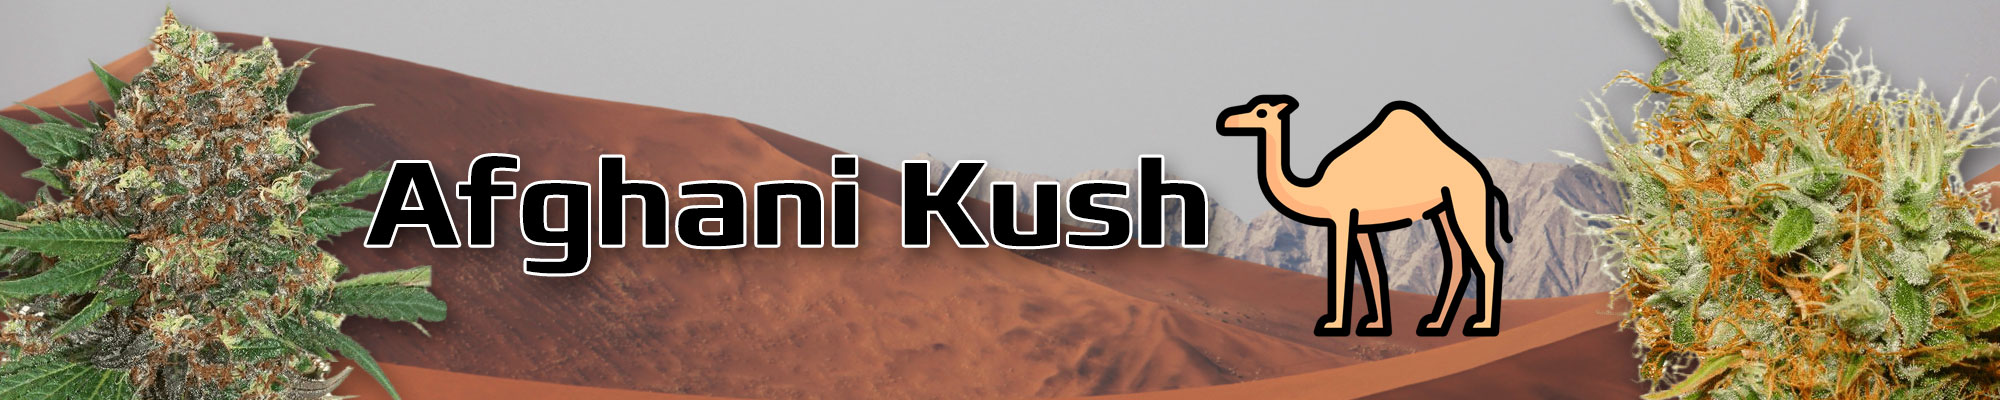 Afghani Kush Cannabis Families